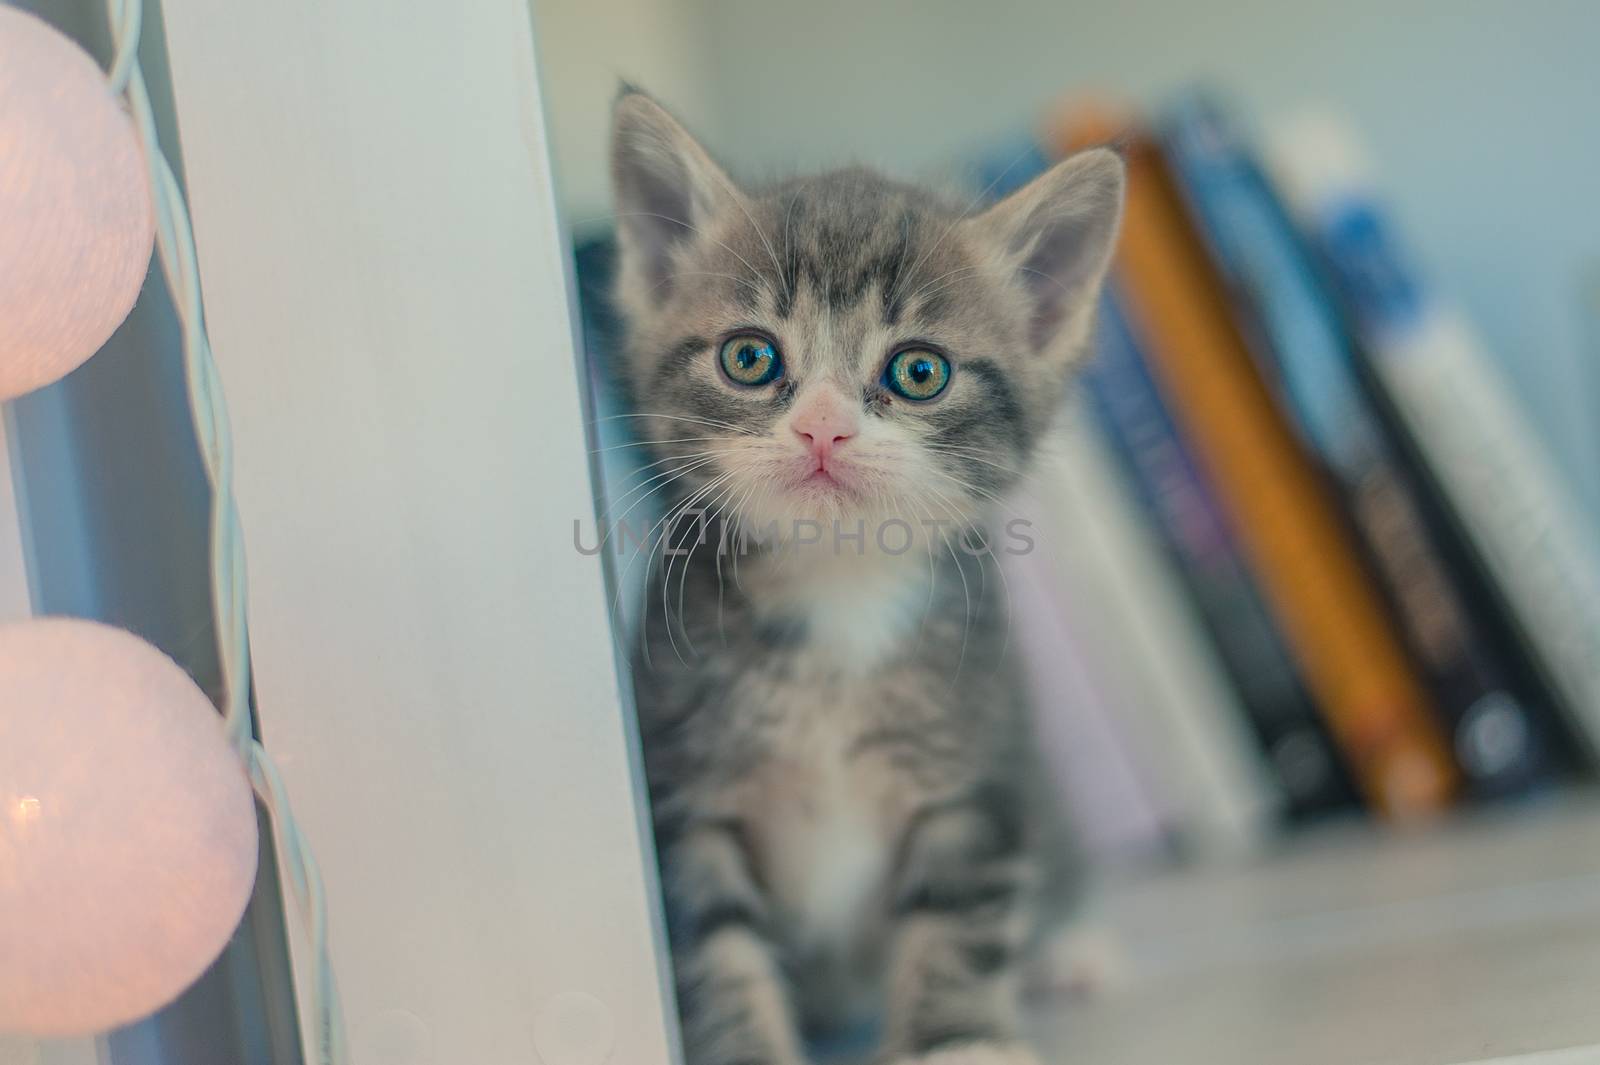 little gray cat on a white shelf near books